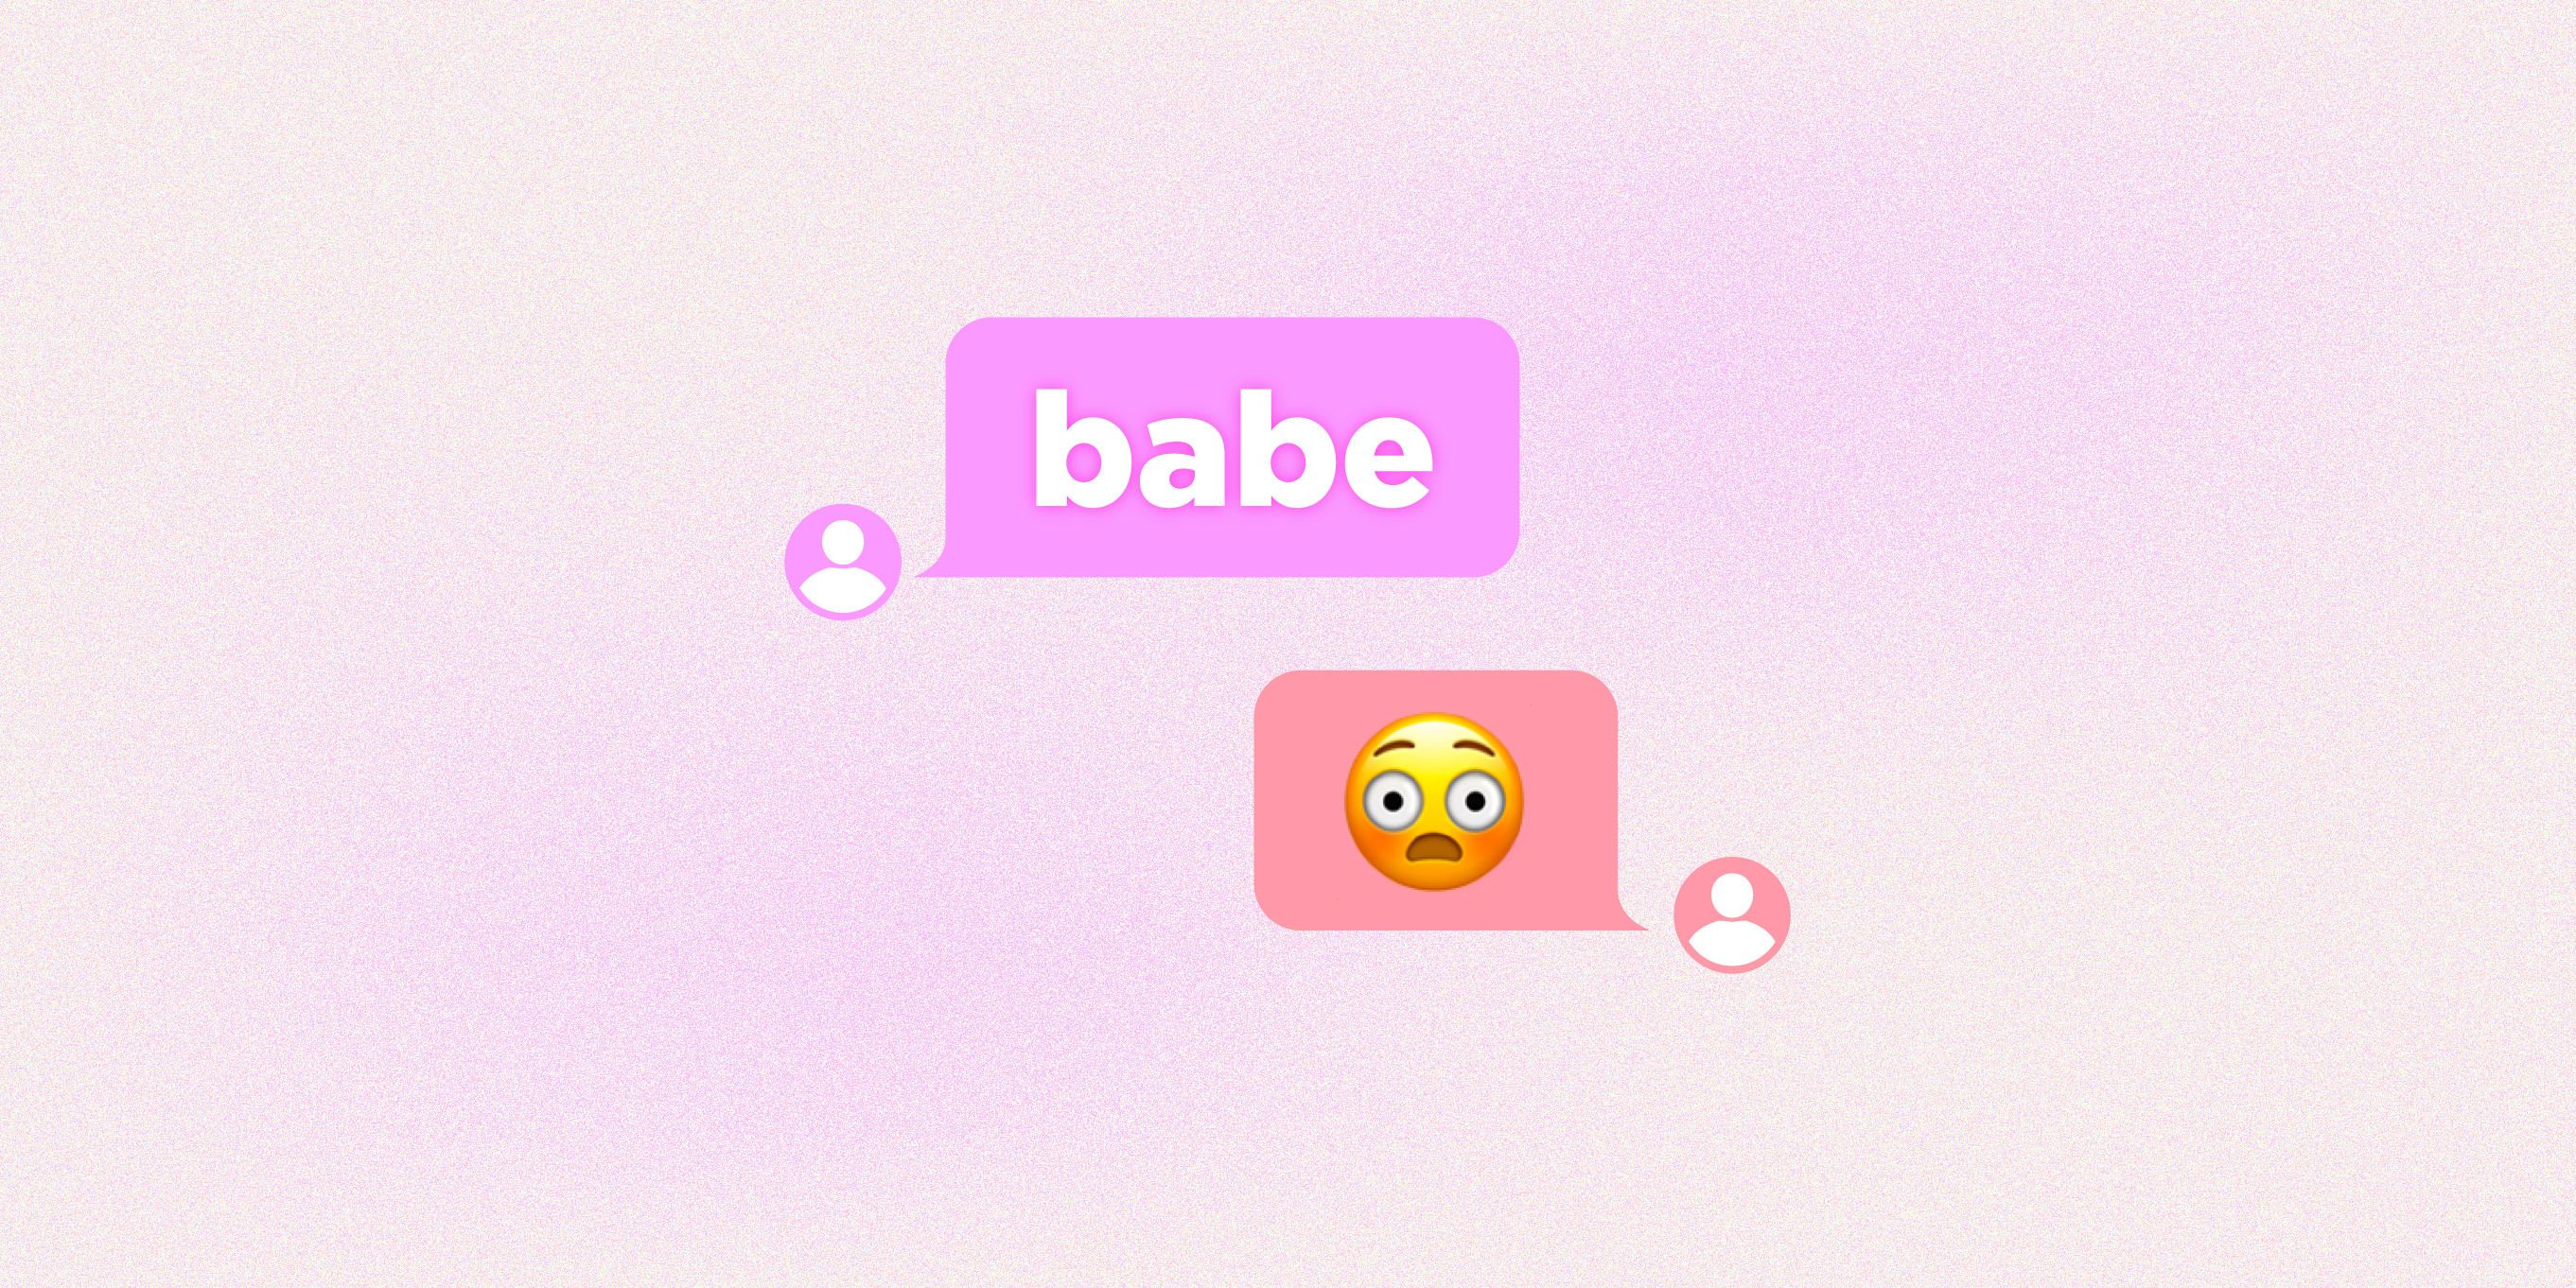 What Does It Mean When My Boyfriend Calls Me Babe?